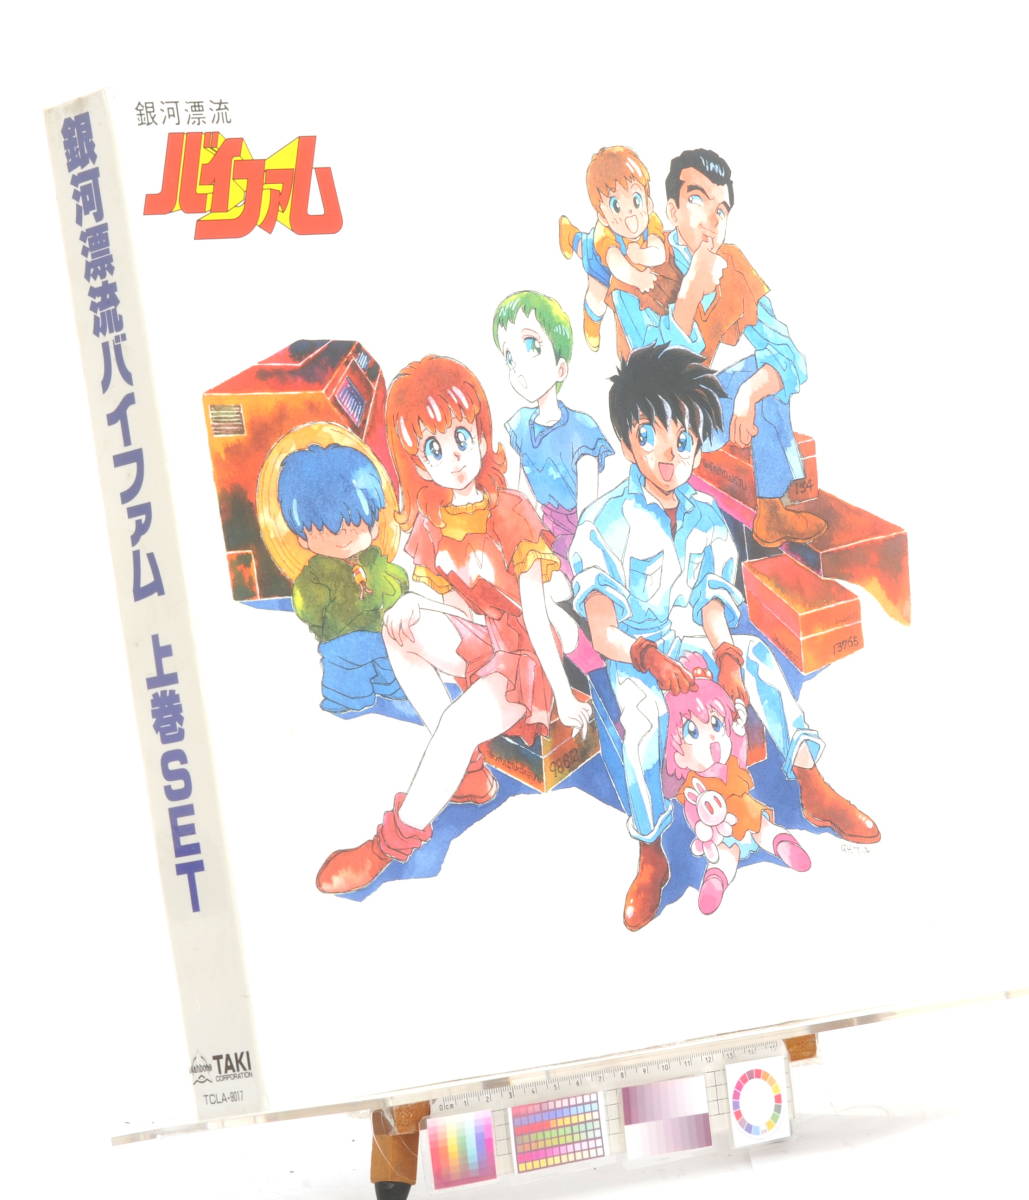 [Delivery Free]1980s Vifam LD Prequel Sequel Set(Ashida Toyoo)LaserDisc,Jacket[Bonus:LD SOFT]銀河漂流バイファム 上巻下巻[tagLD]